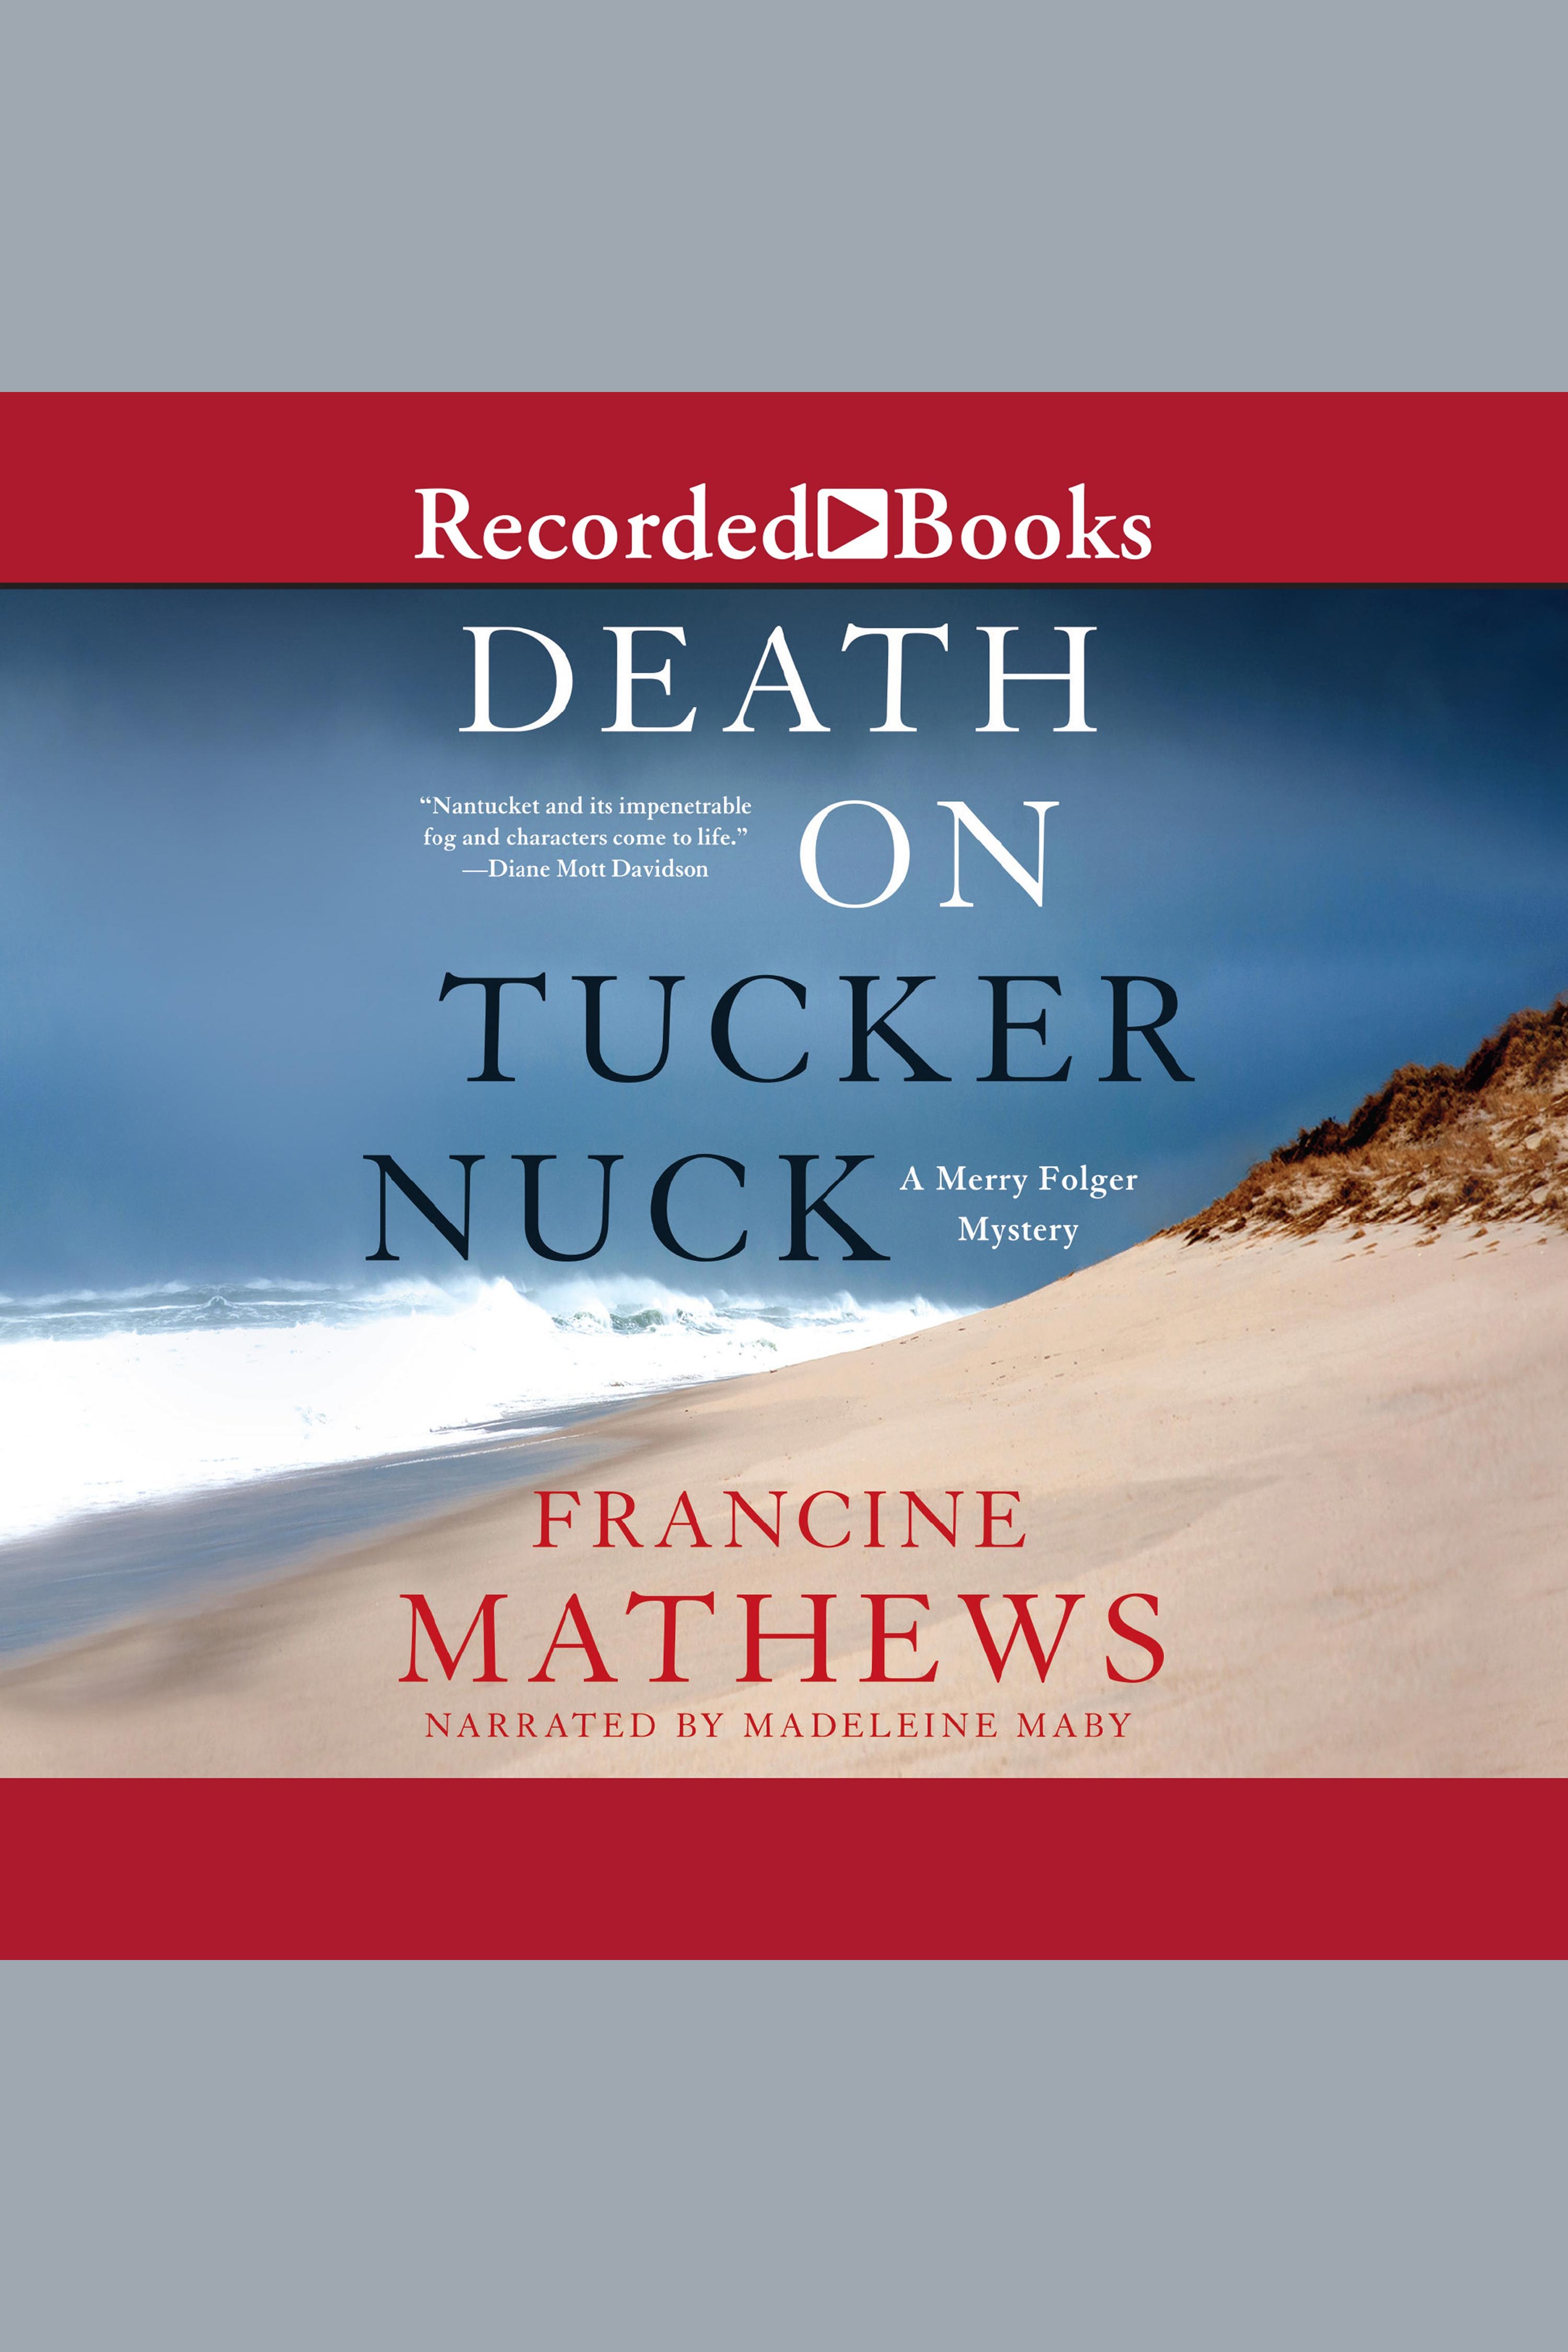 Image de couverture de Death on Tuckernuck [electronic resource] : A Merry Folger Nantucket Mystery